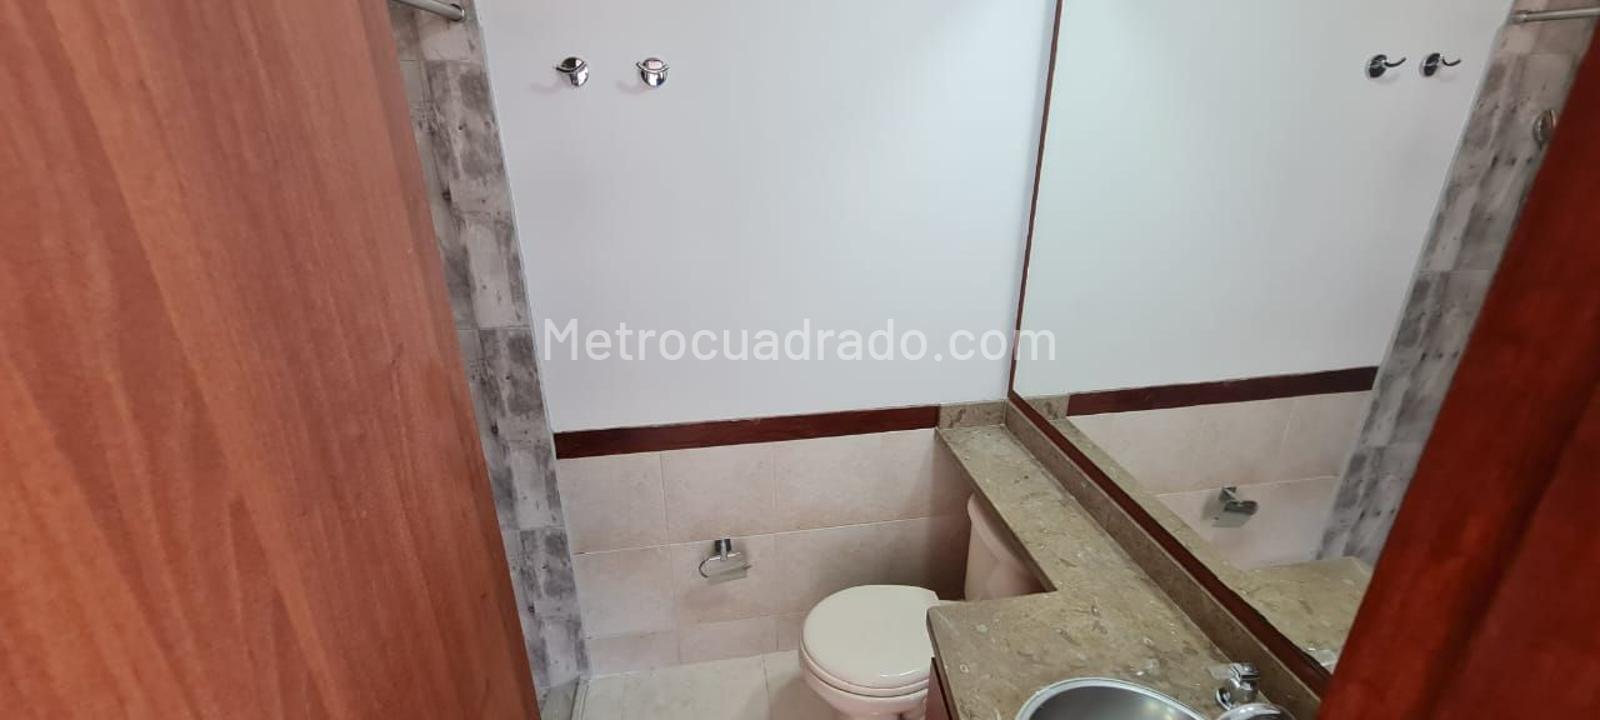 https://multimedia.metrocuadrado.com/597-M4946597/597-M4946597_3_h.jpg